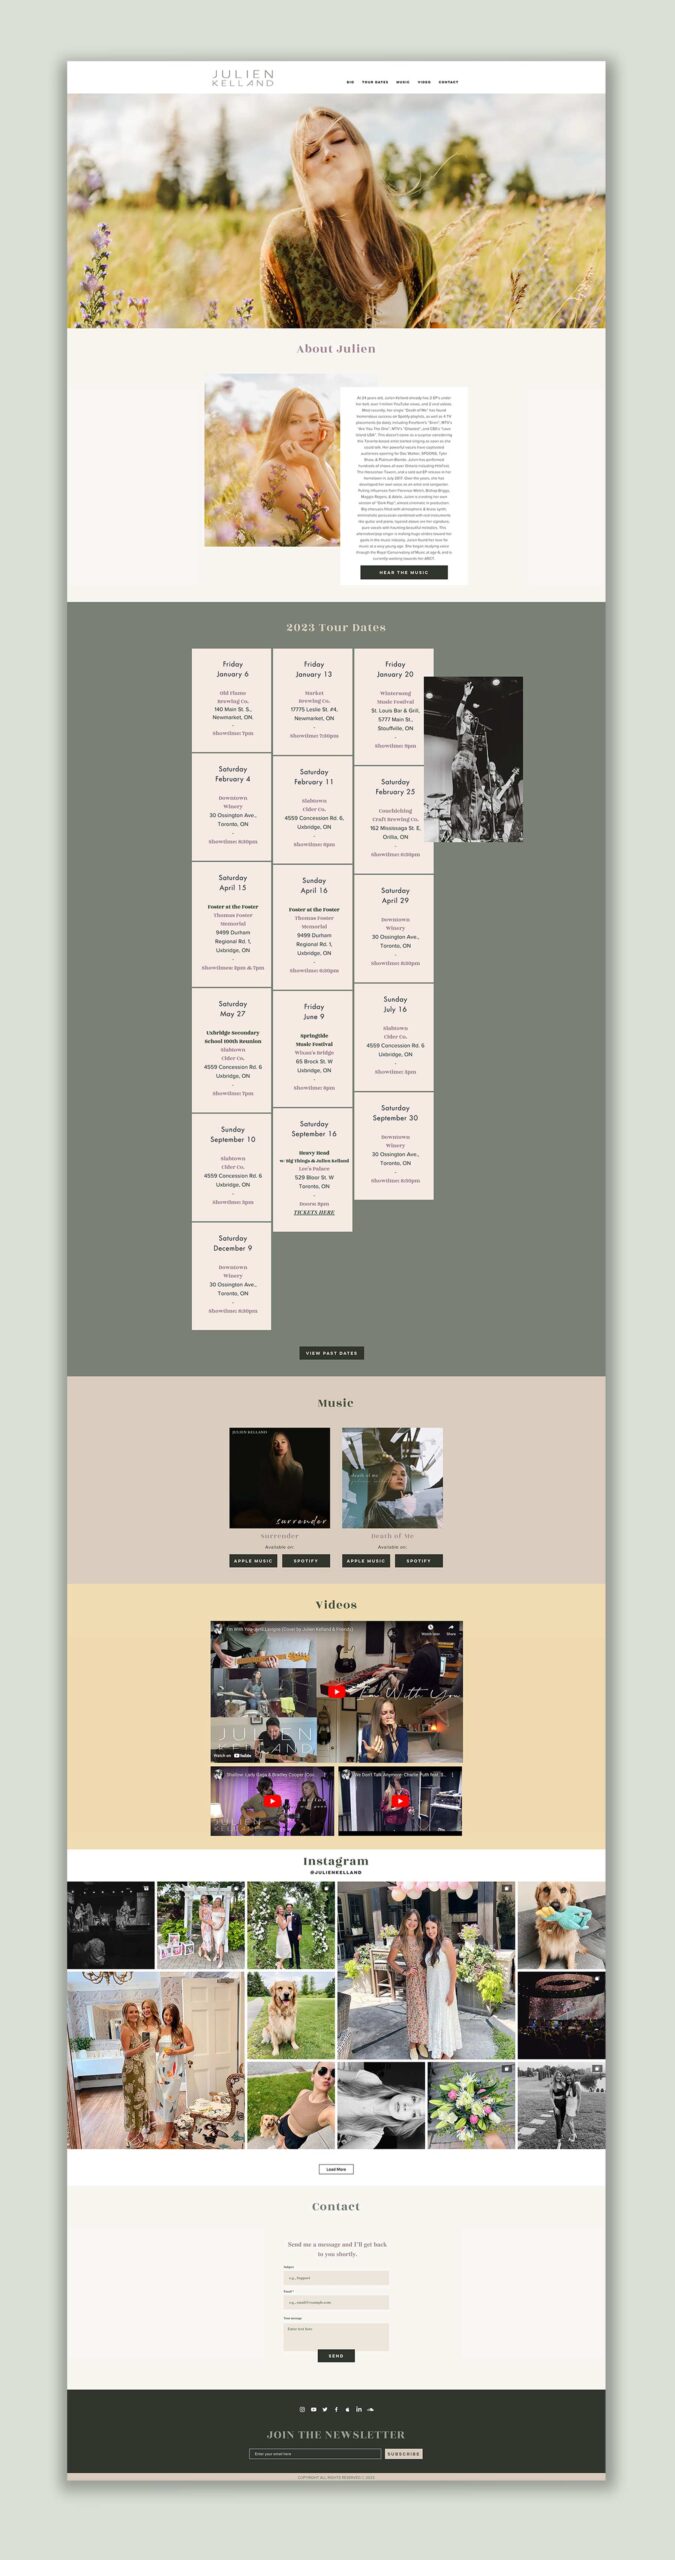 julien-kelland-homepage-website-design